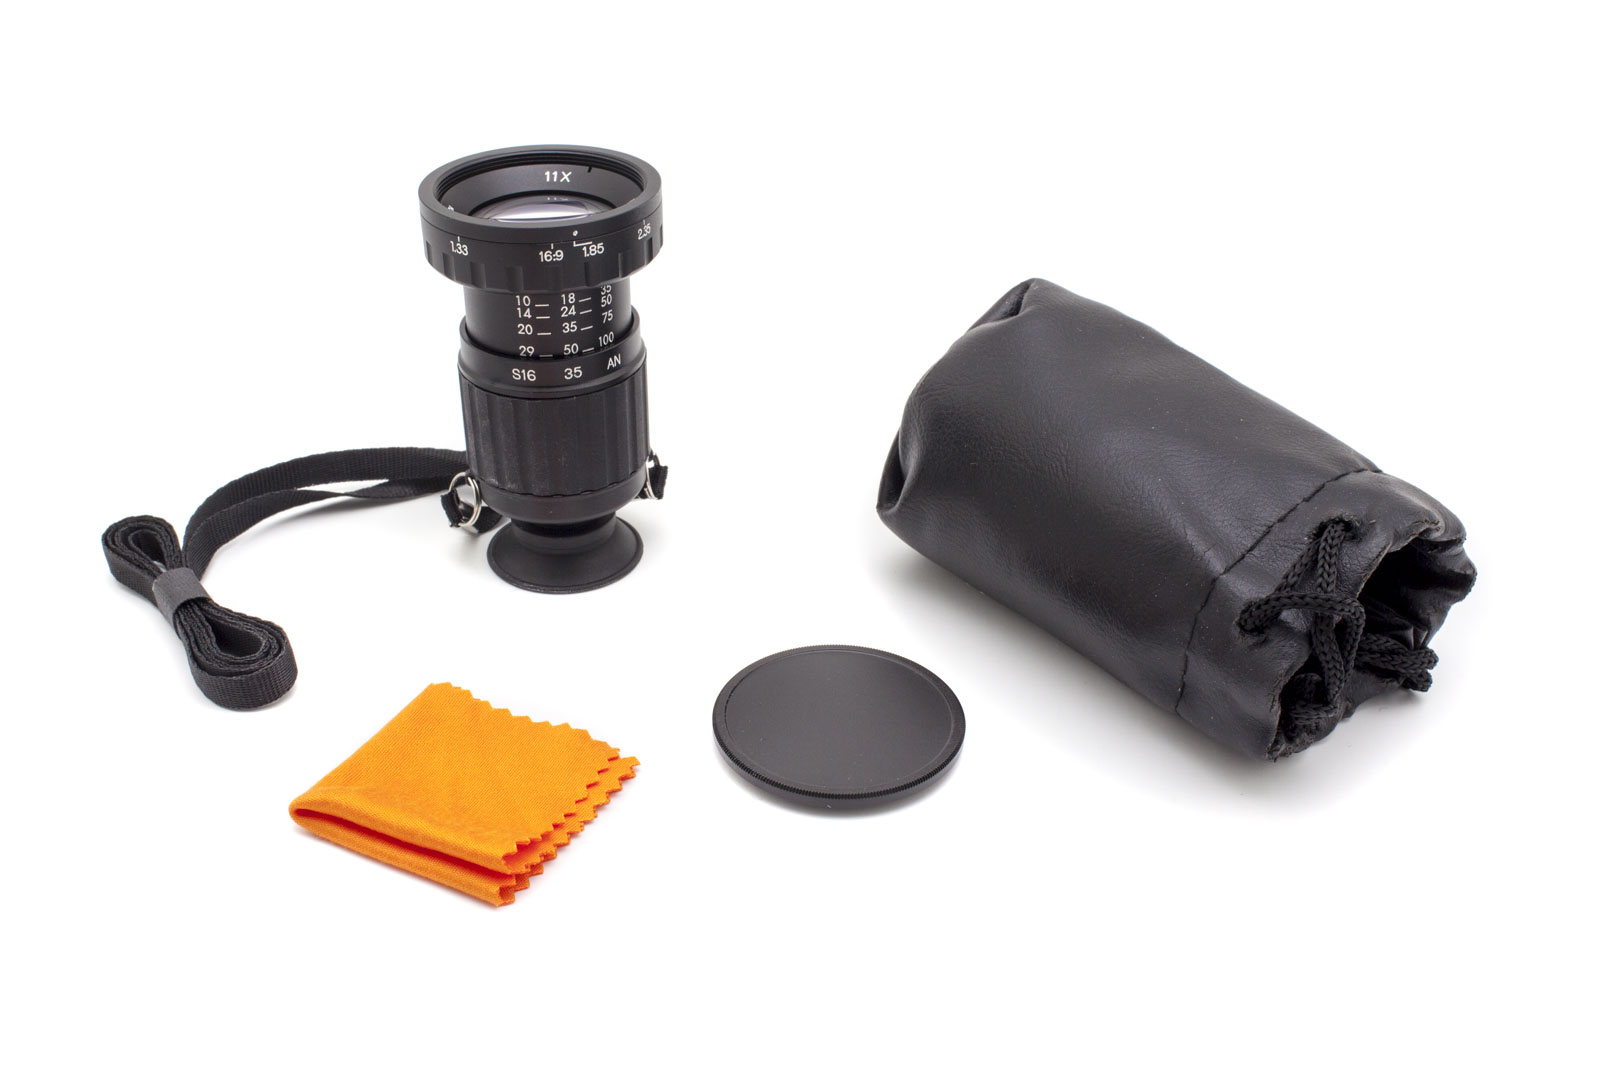 Pocket Mini Director's Viewfinder kit - viewfinder, pouch, cap, microfiber cloth